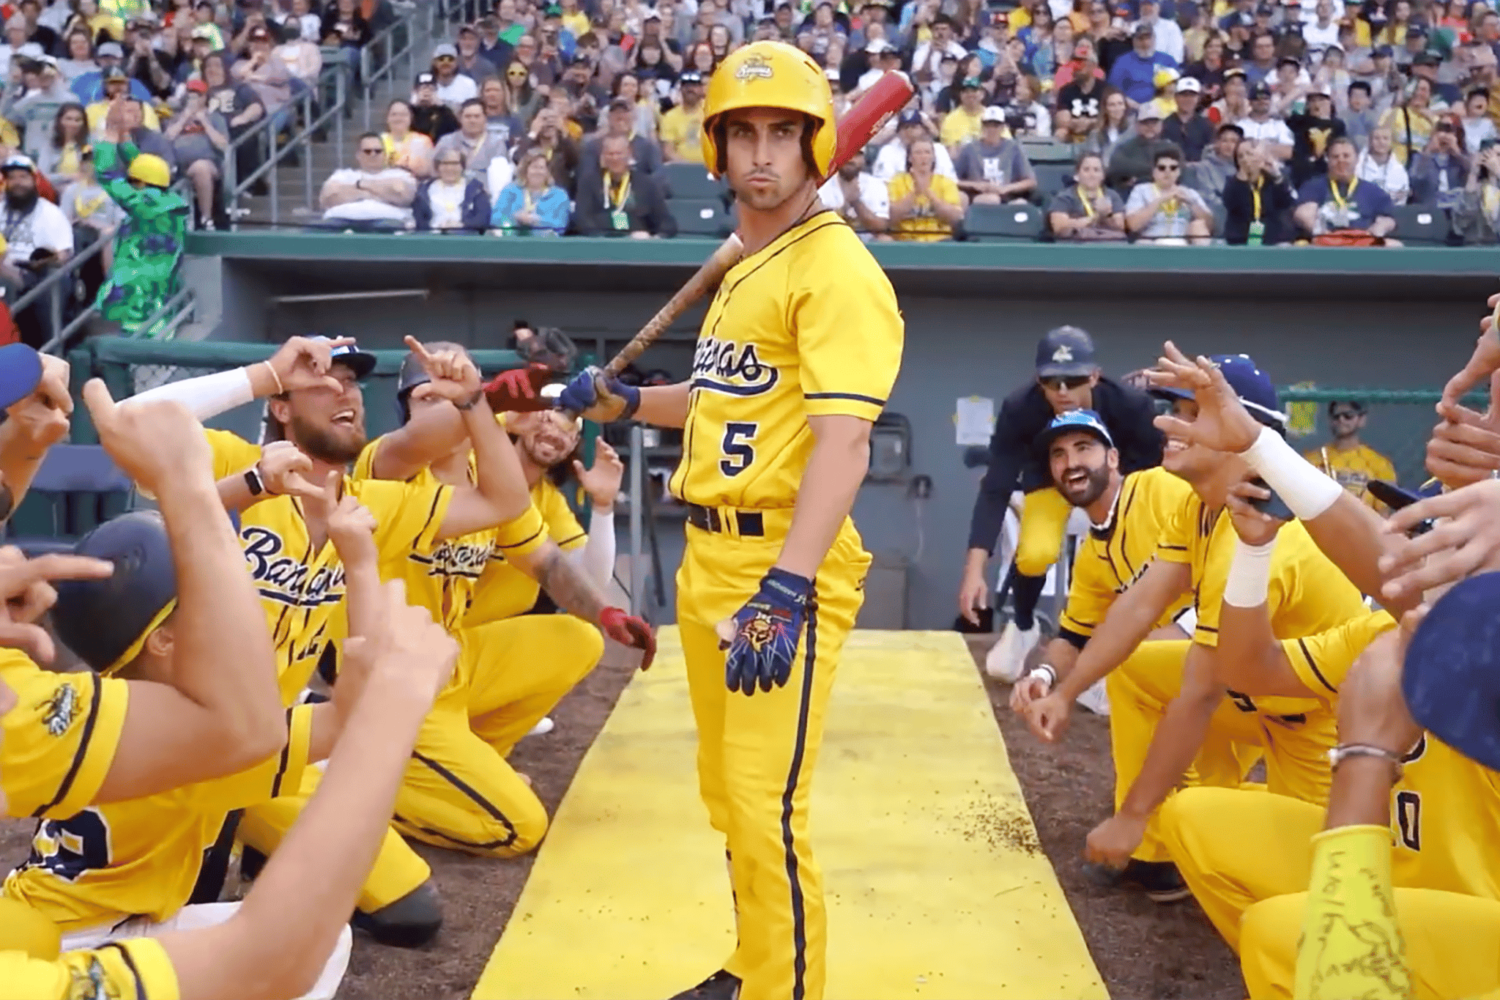 The Disney Way”: How Minor League Baseball Uses Fun and Community